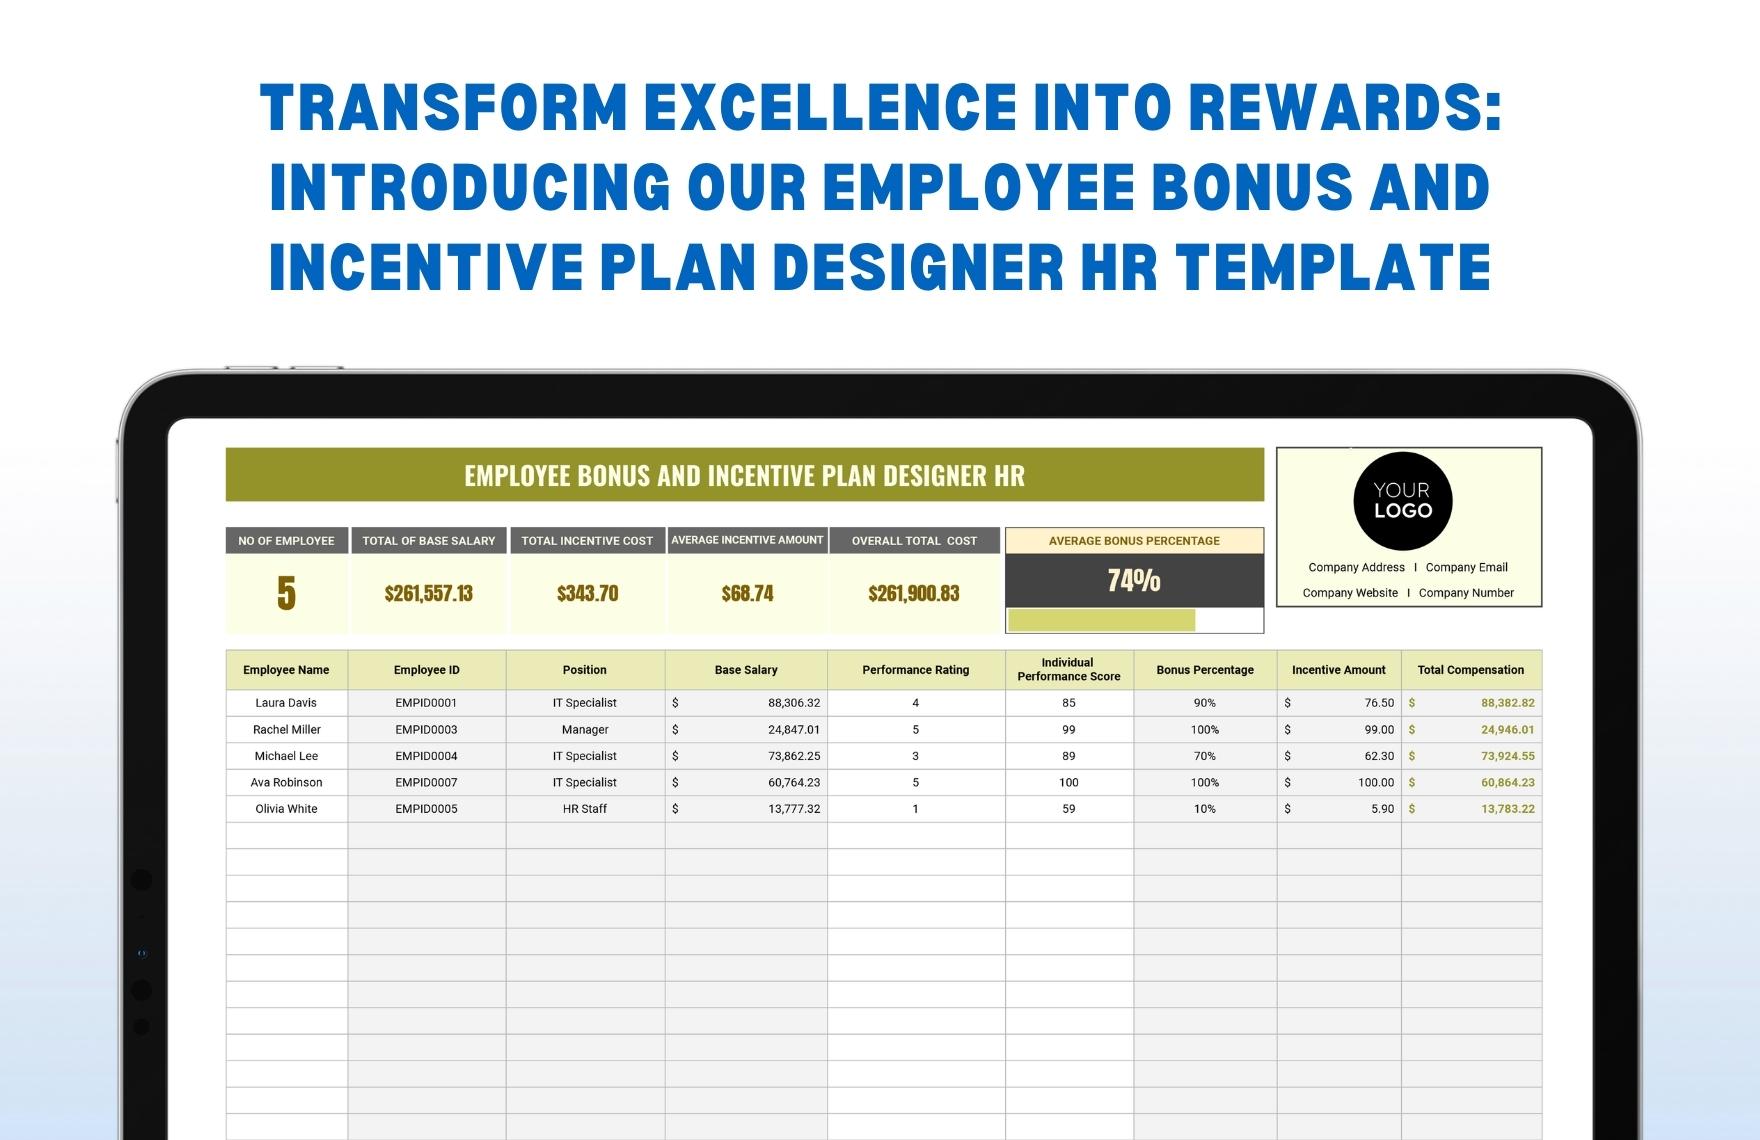 Employee Bonus and Incentive Plan Designer HR Template